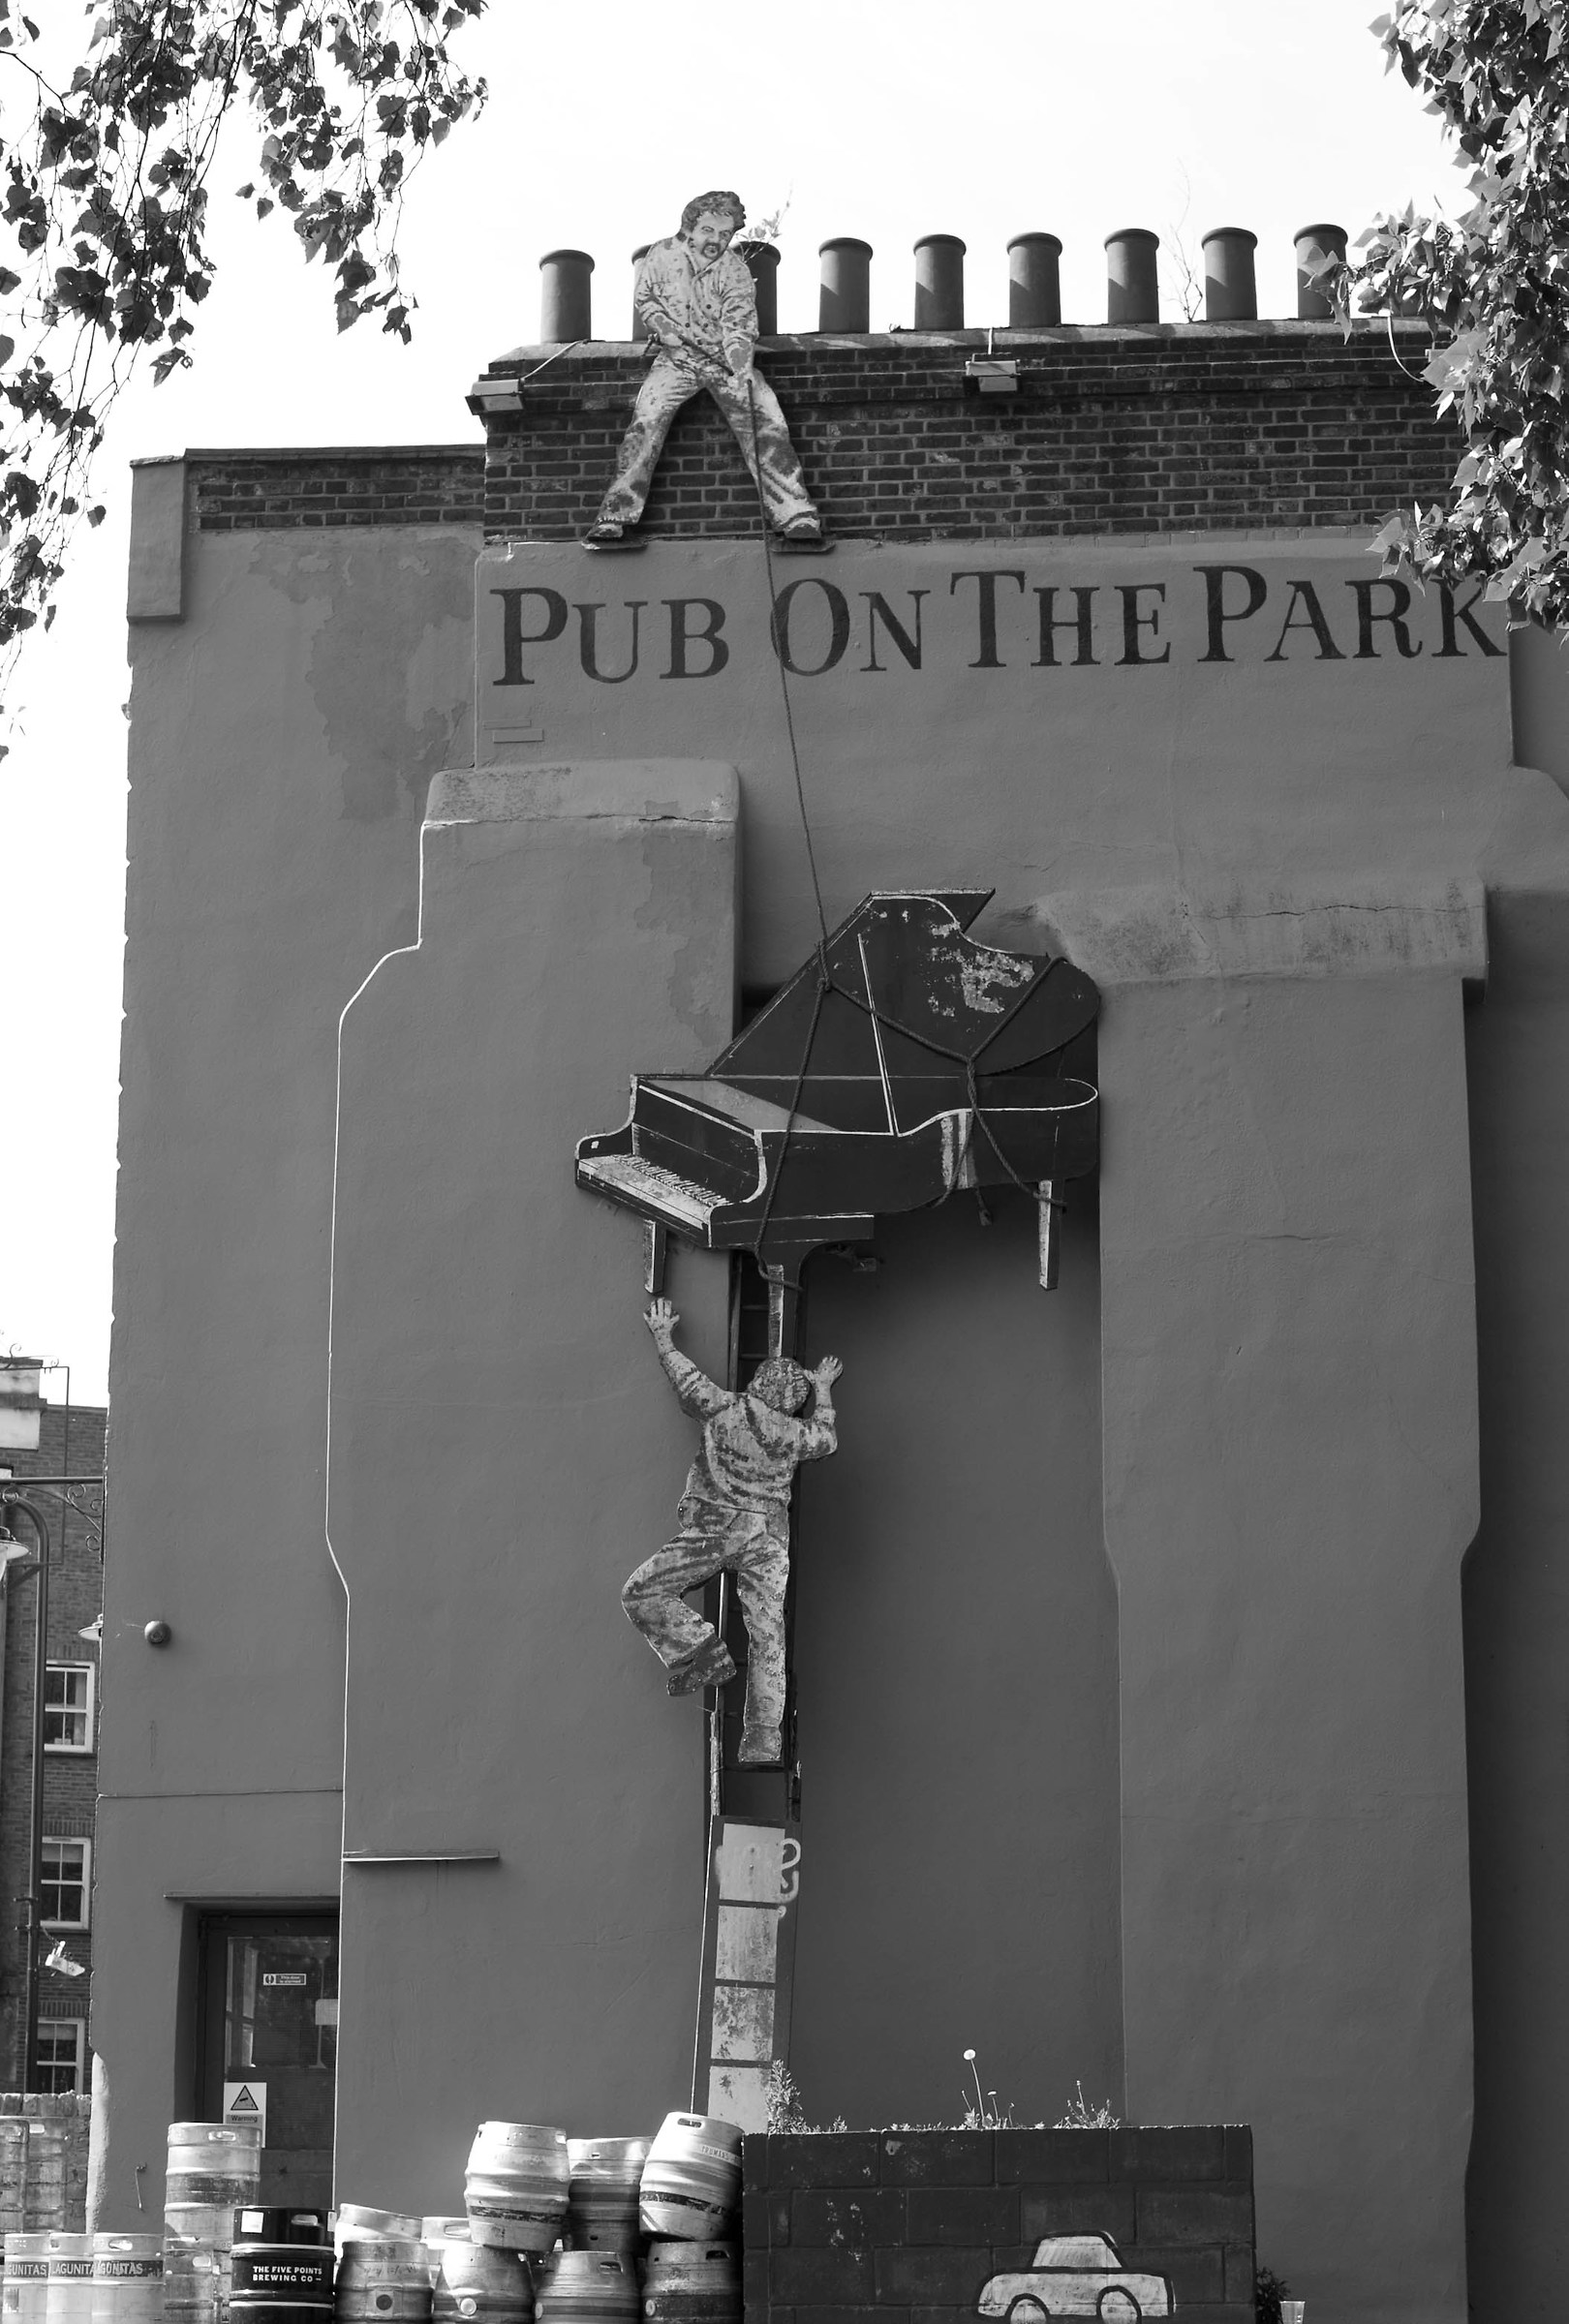 Pubs in the park, London Fields park...